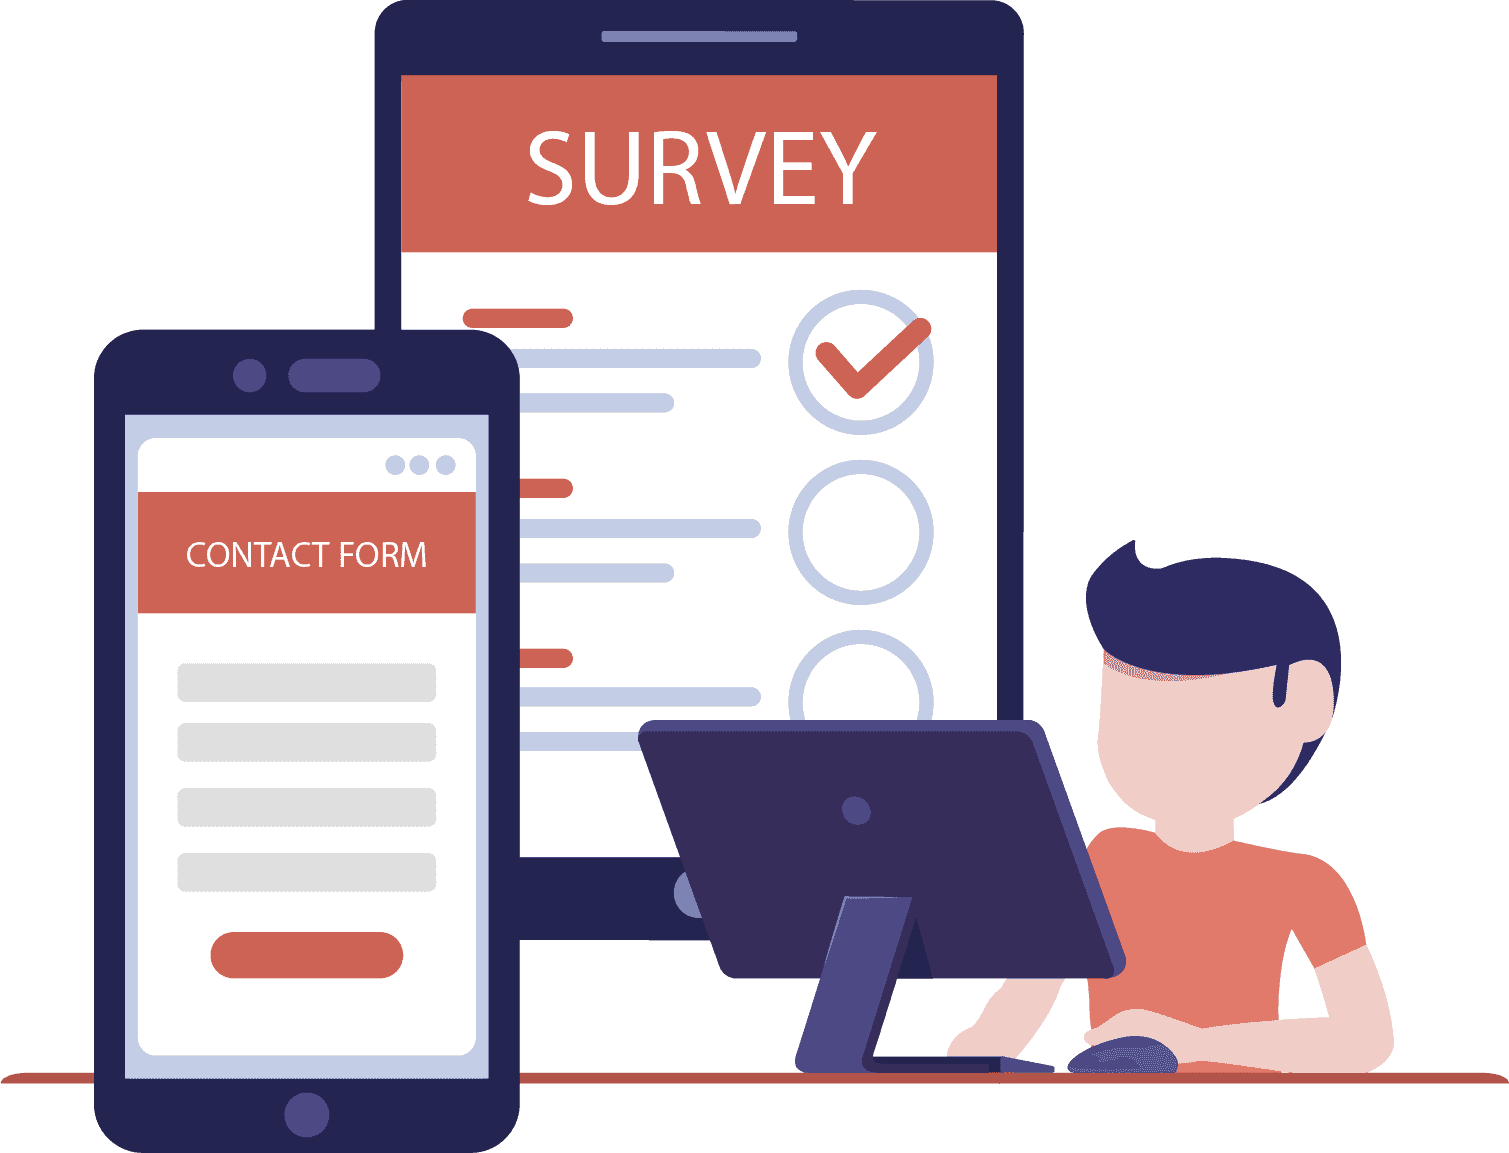 Design forms, surveys, or polls with Flexmail